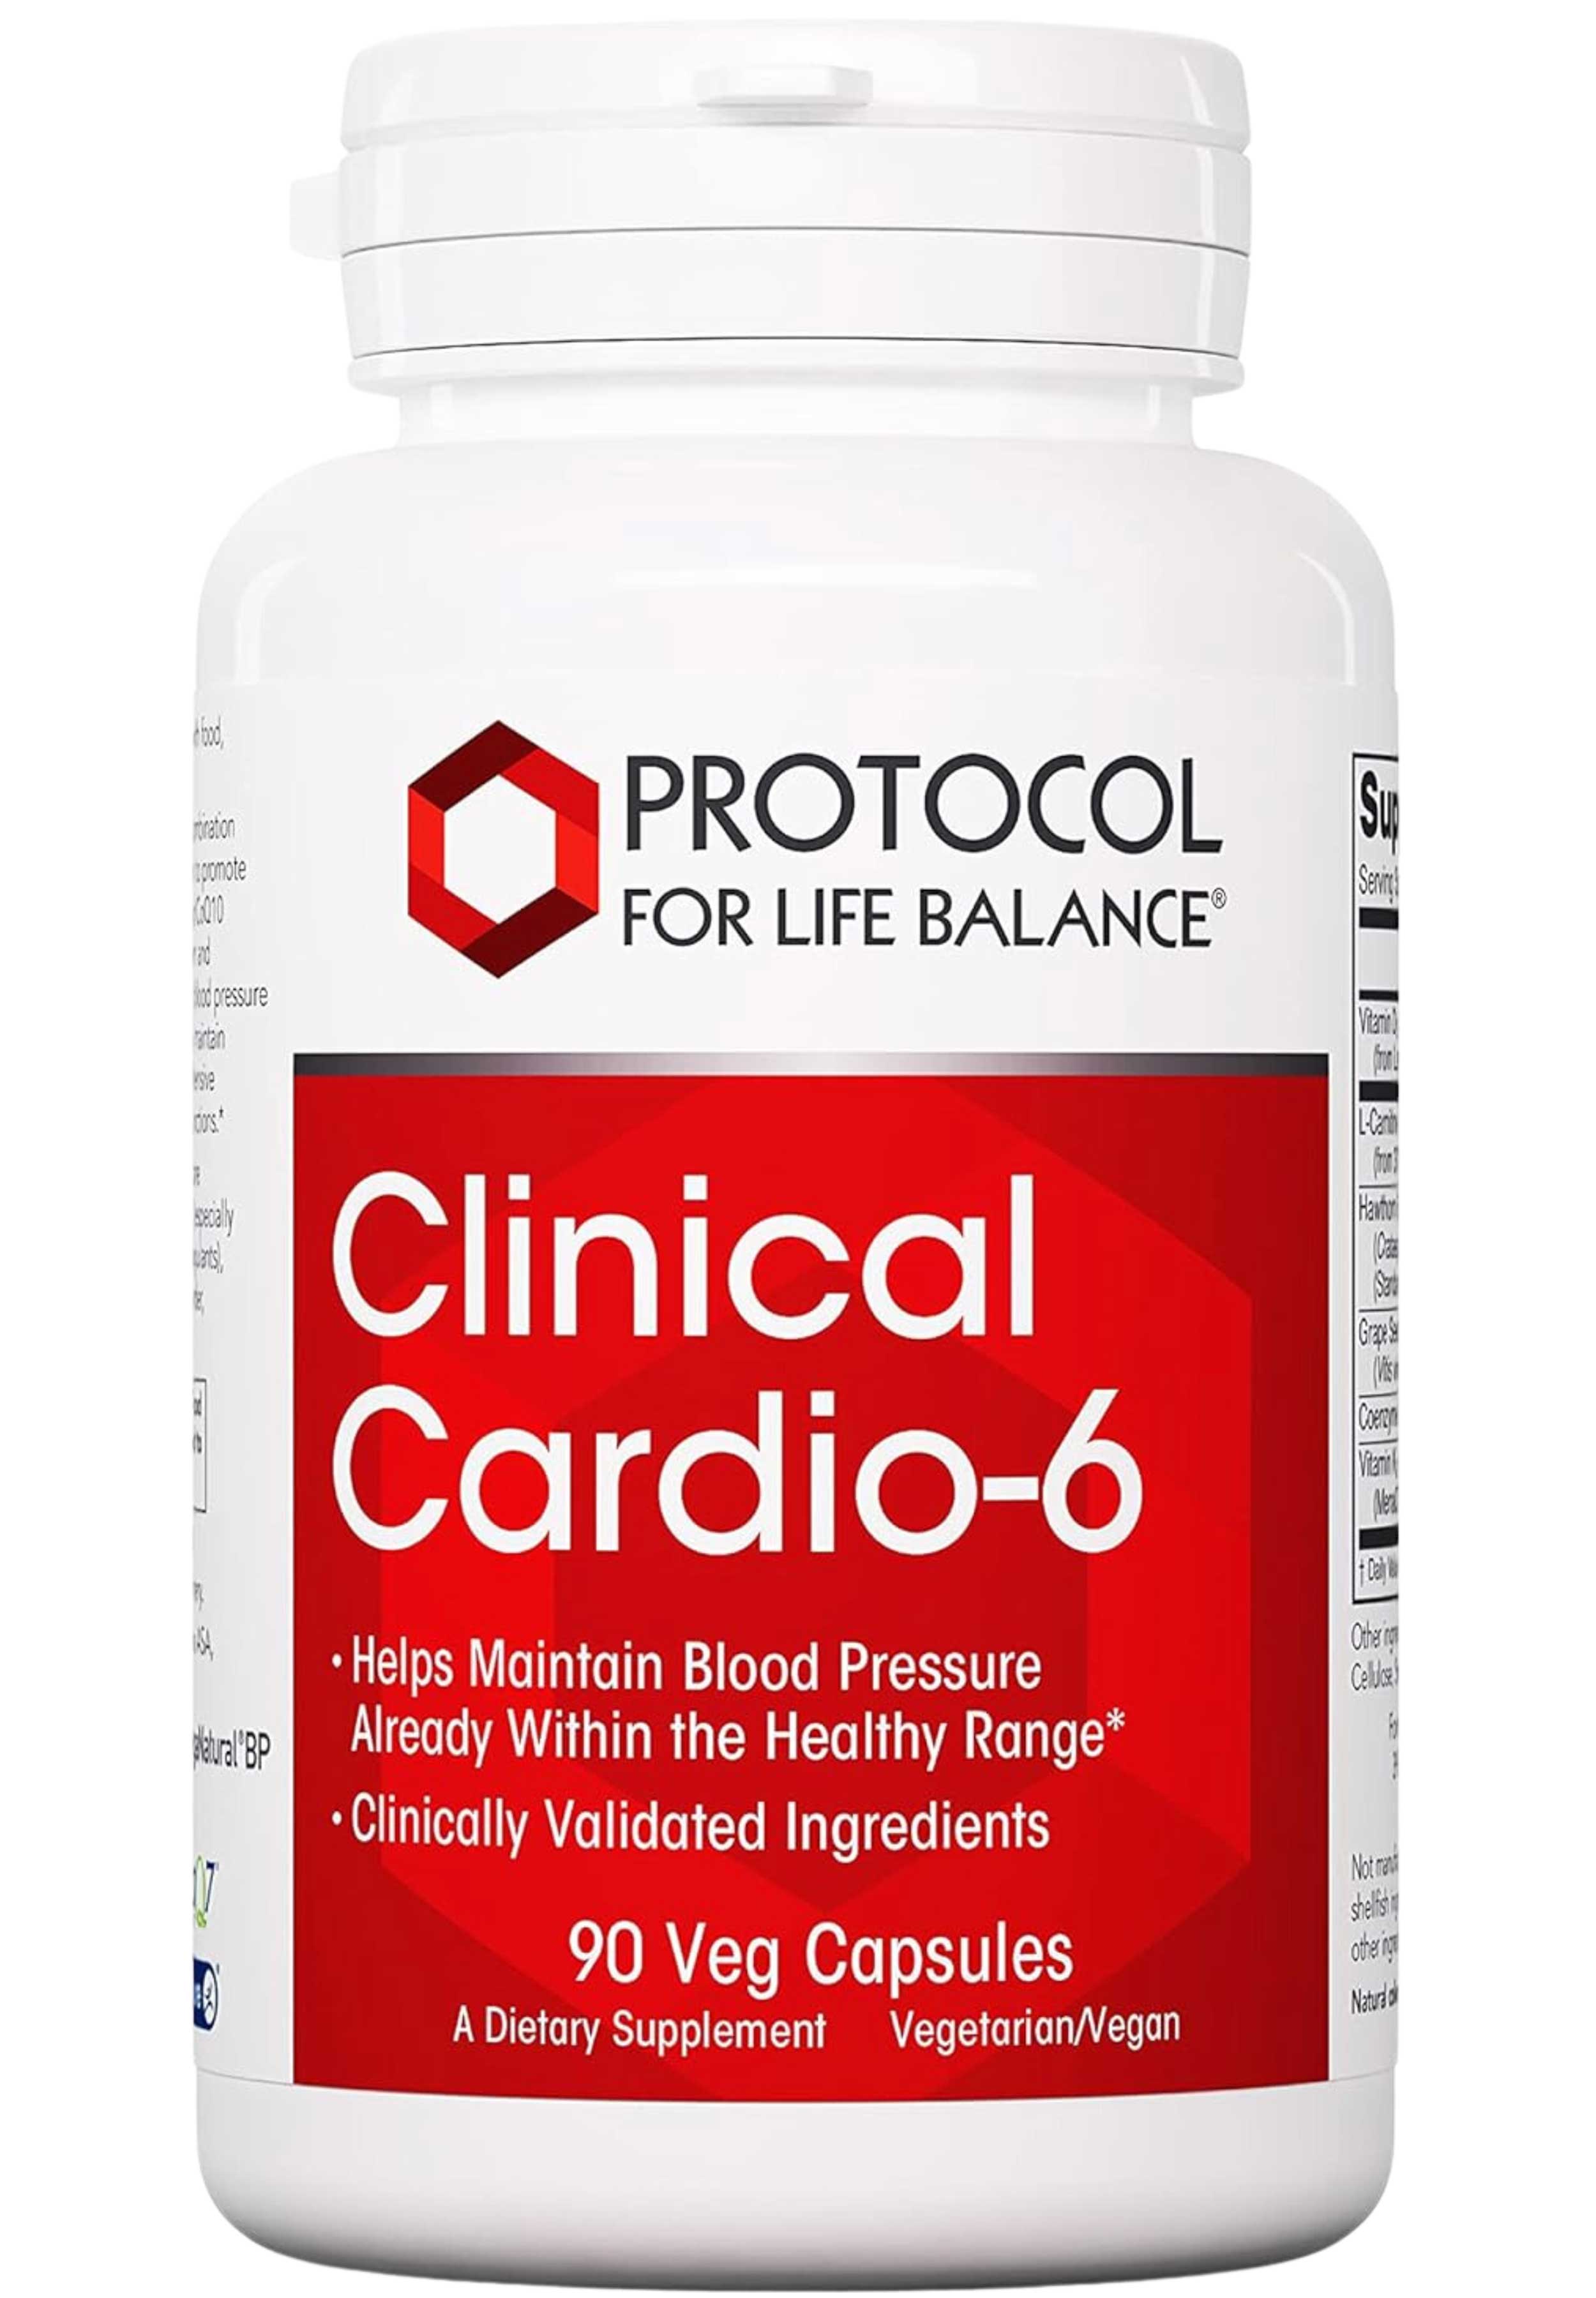 Protocol for Life Balance Clinical Cardio-6